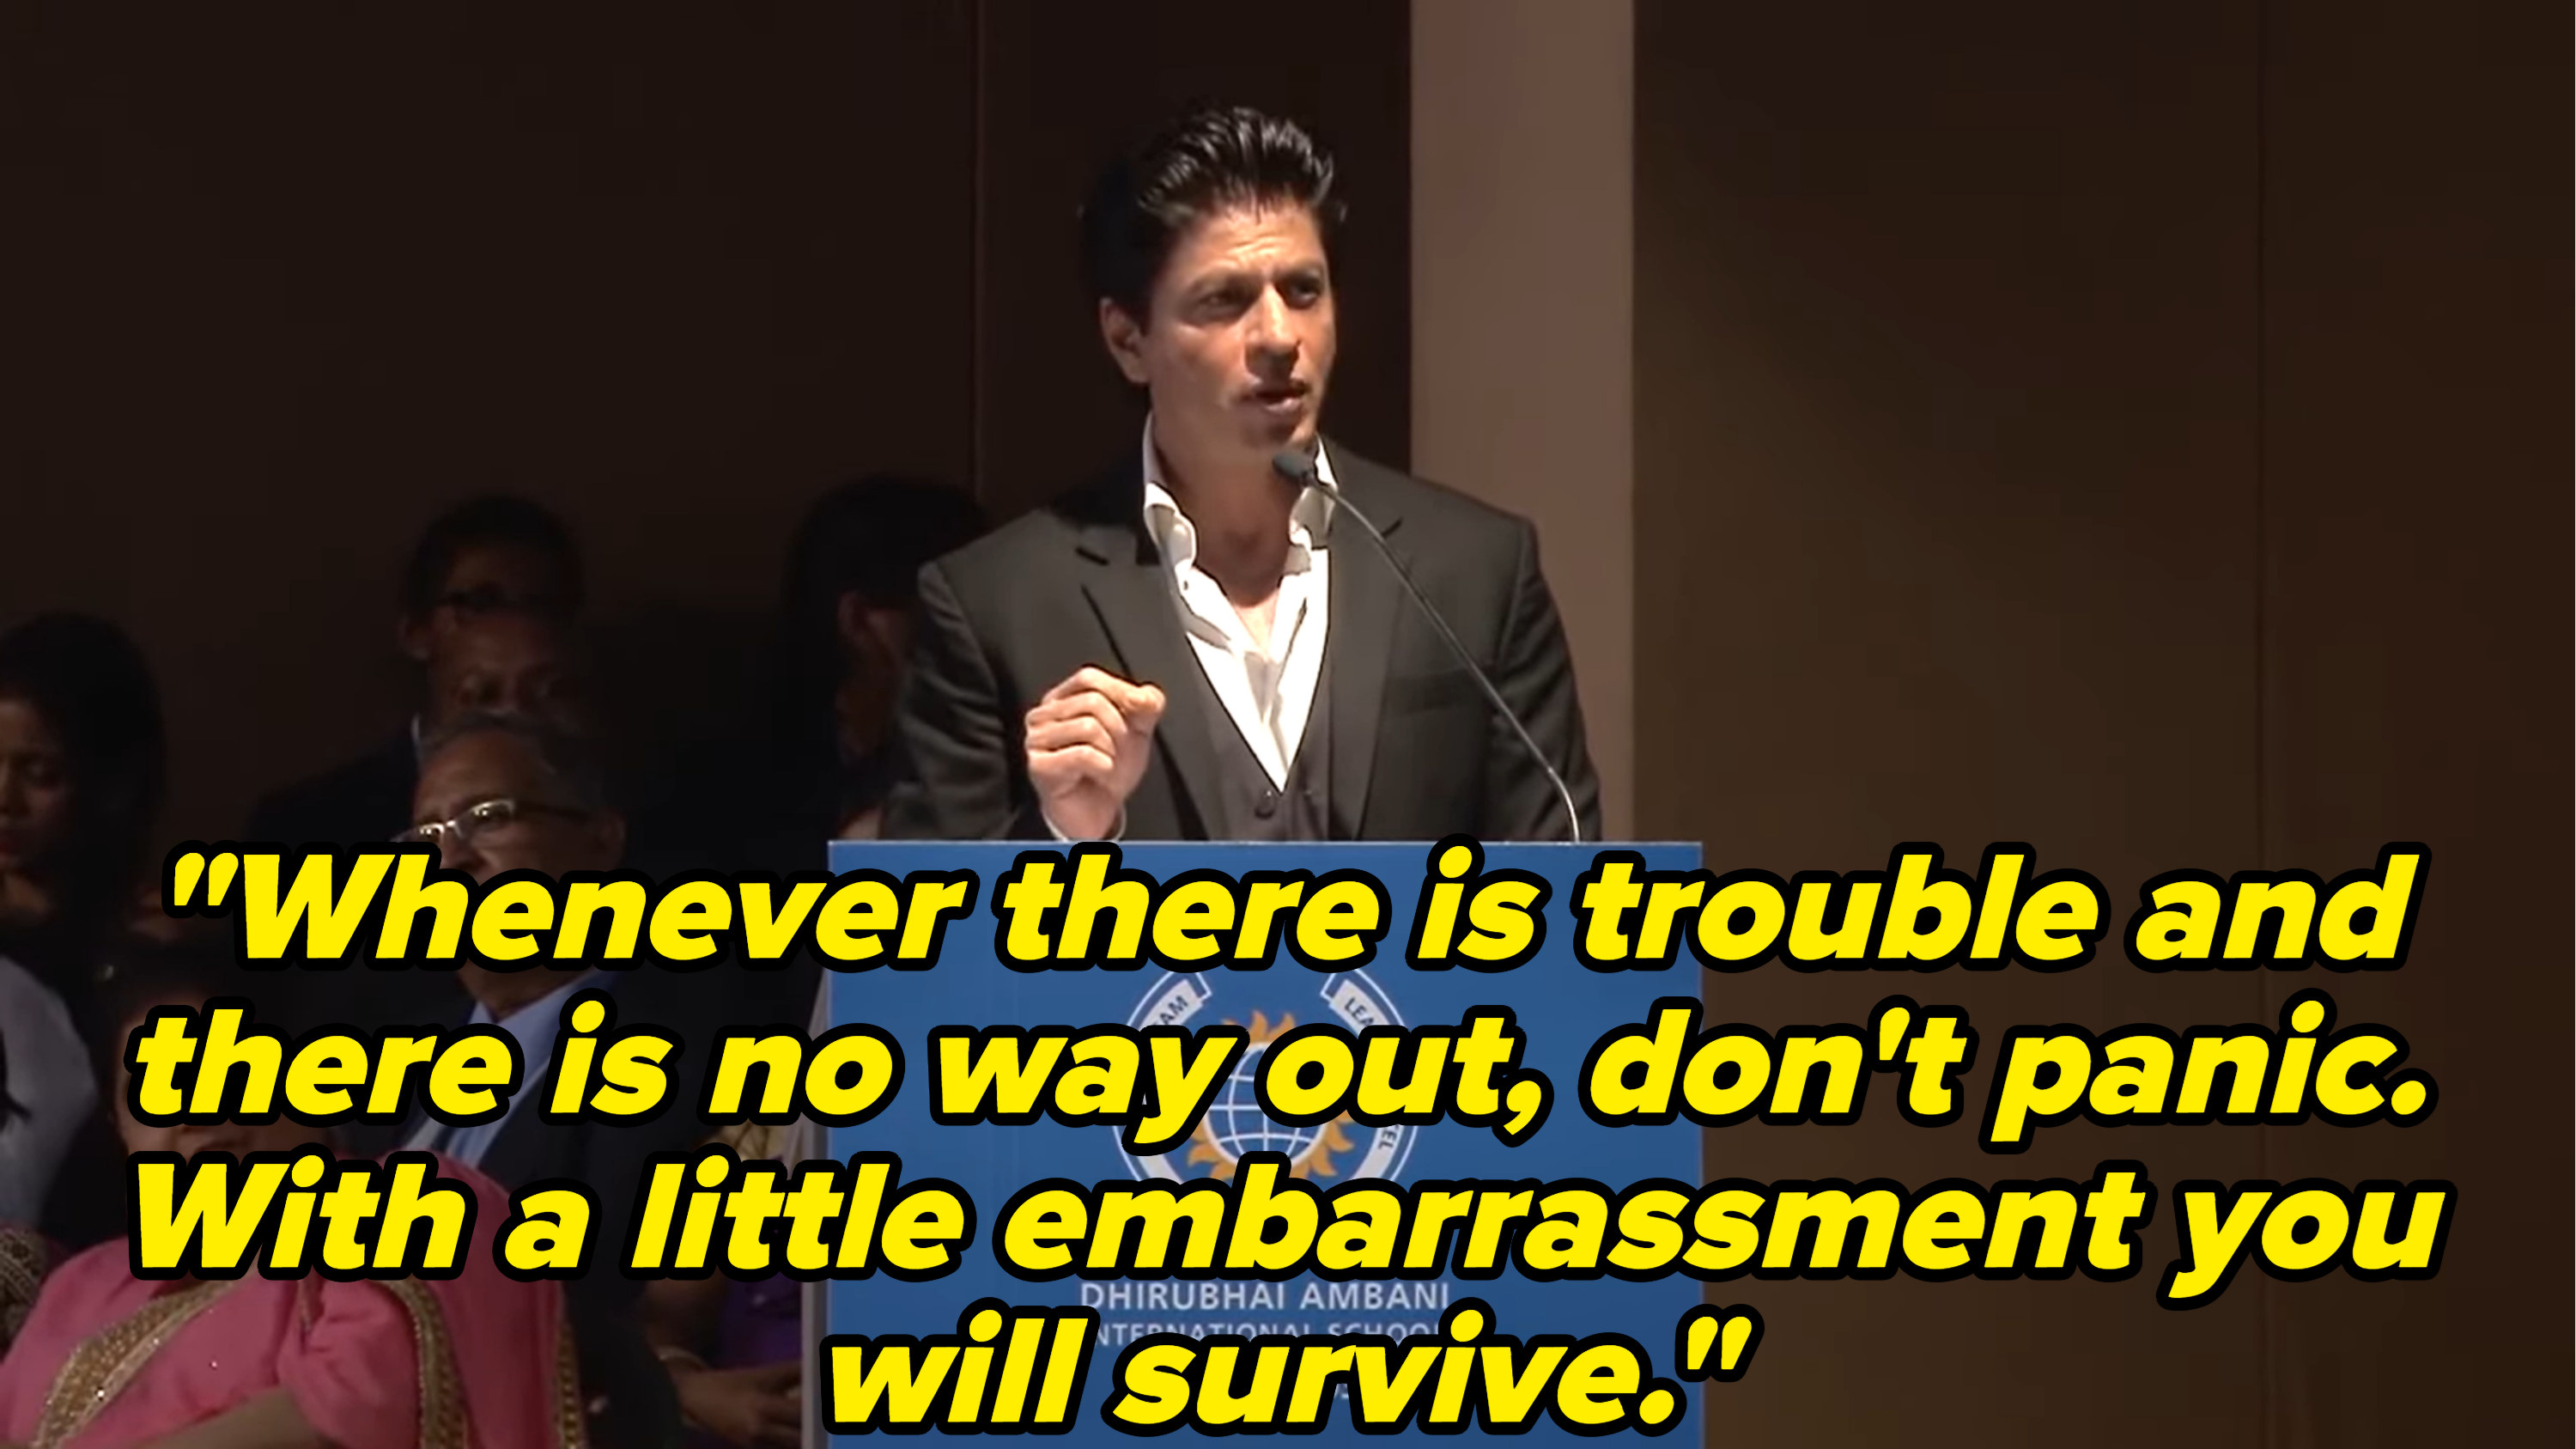 Shahrukh Khan giving a speech